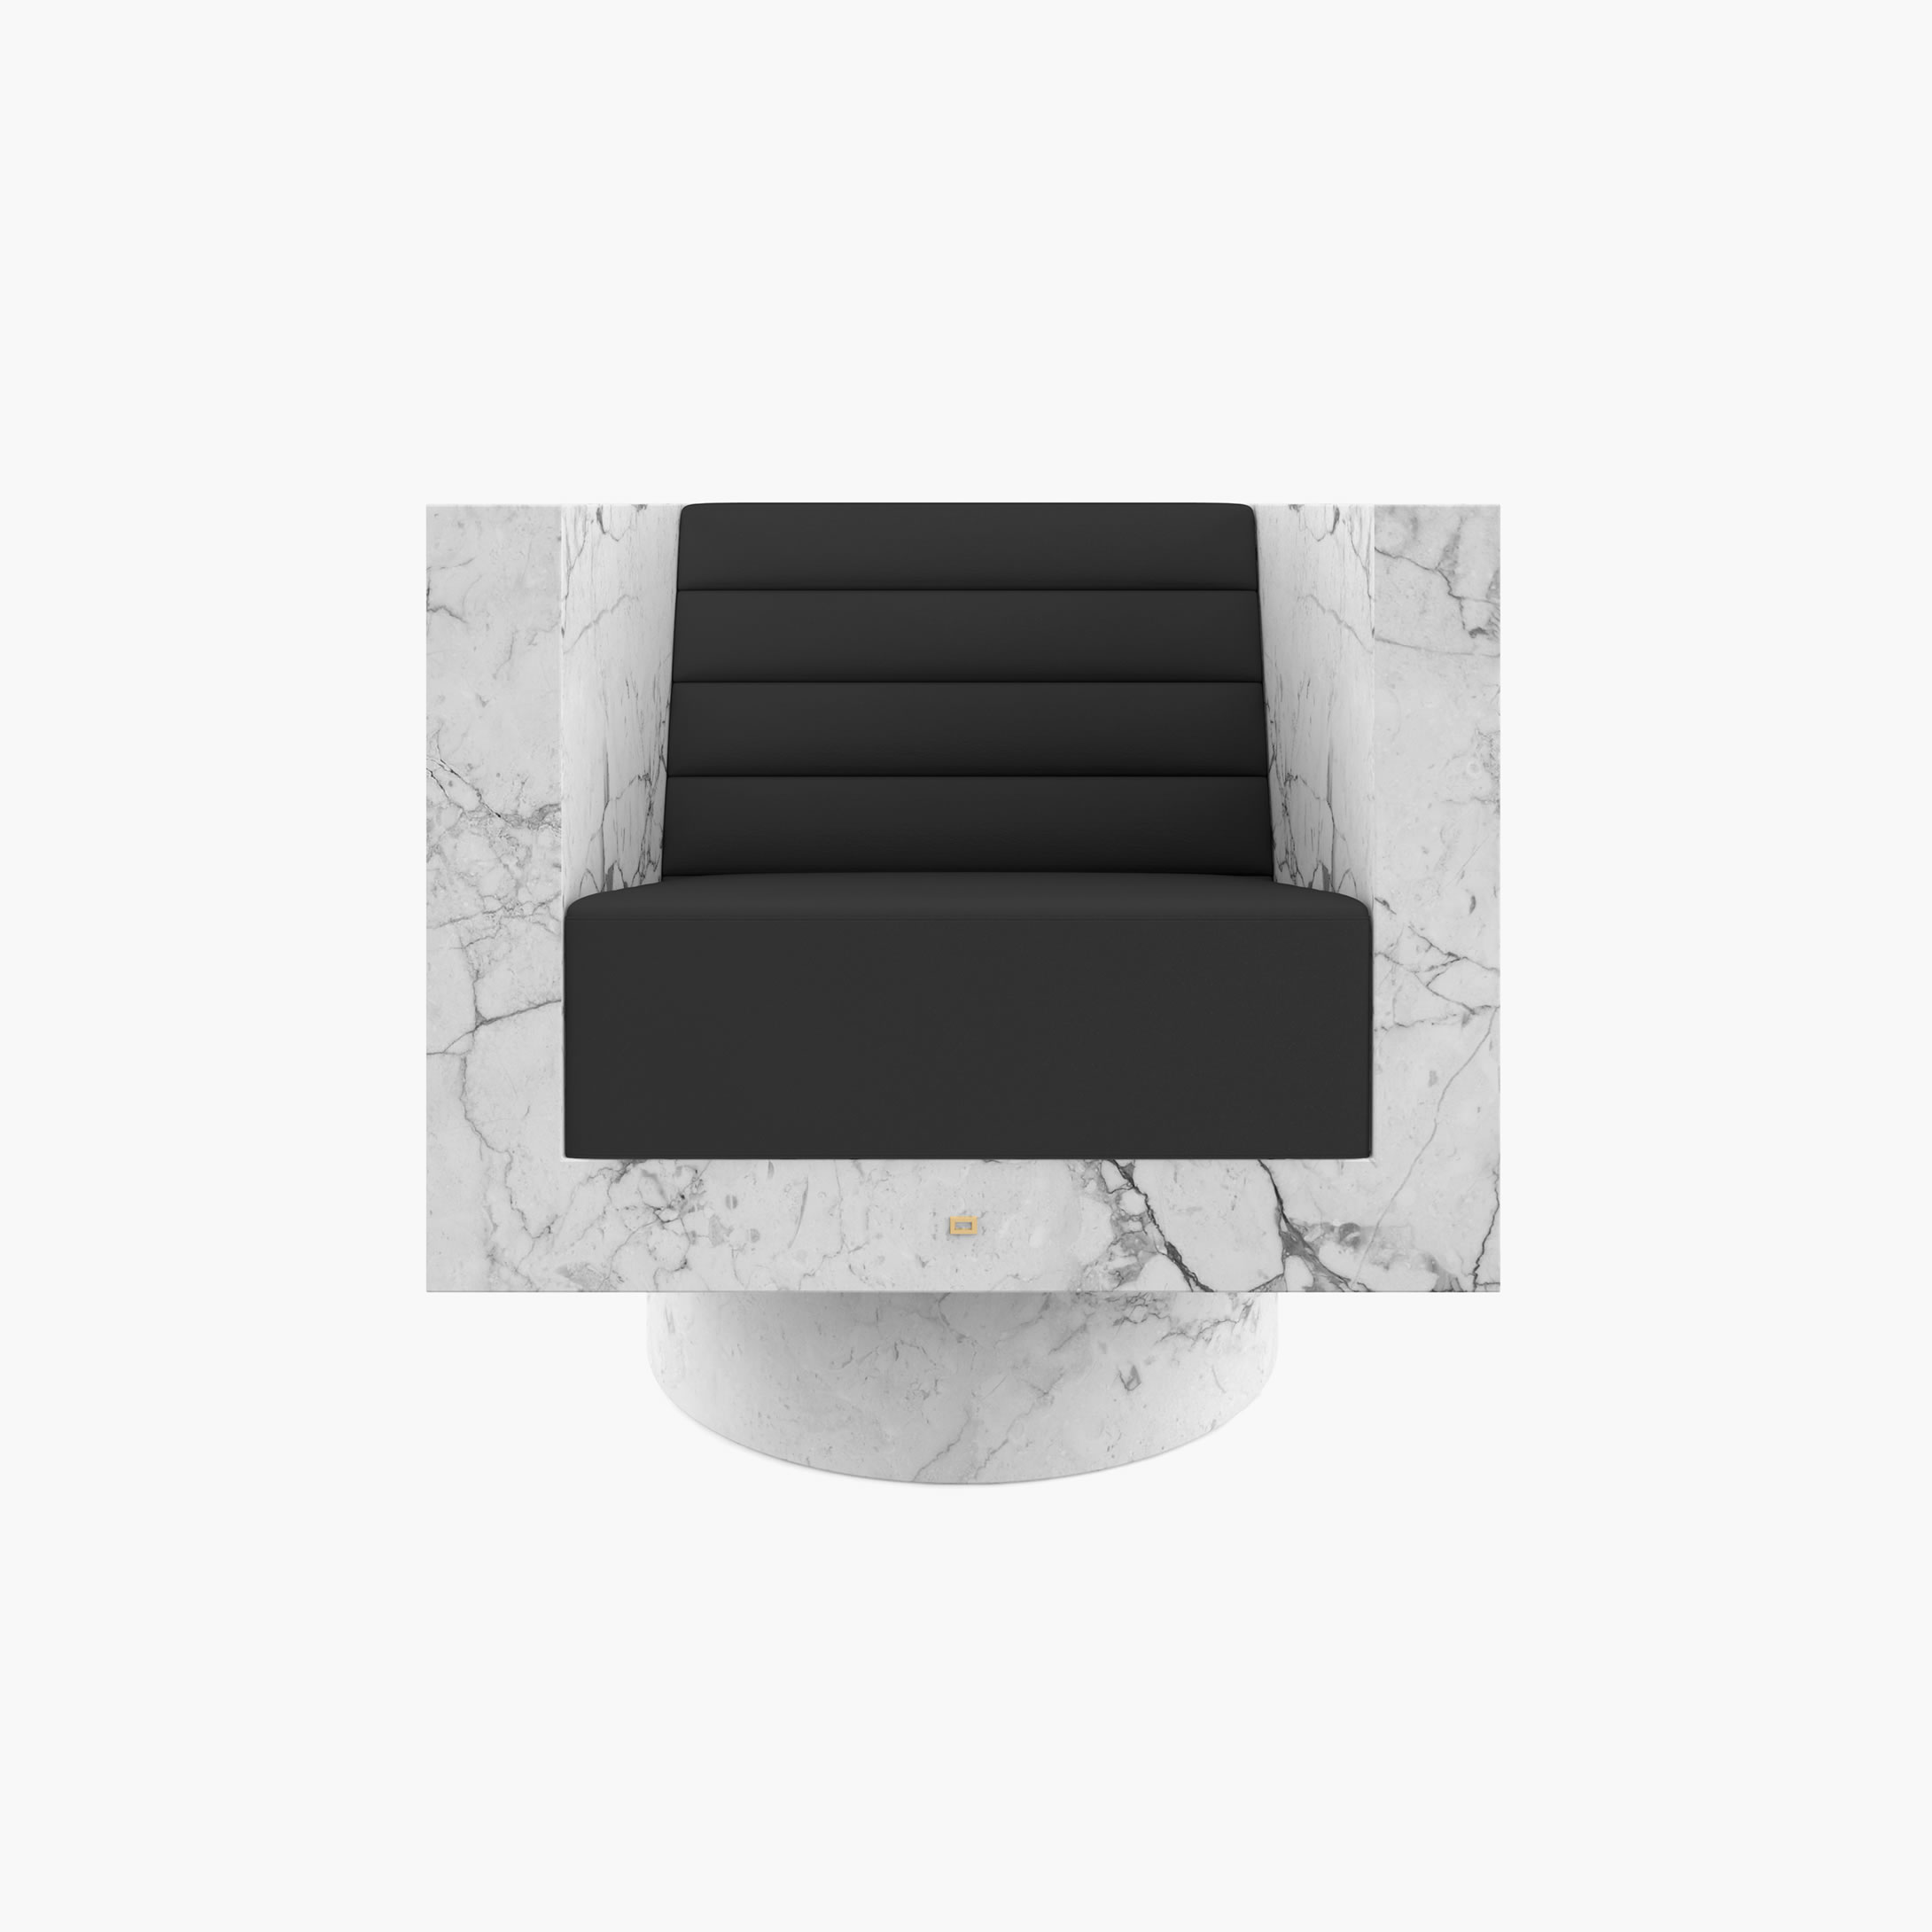 Stuhl mit Armlehnen Weiss Arabescato Marmor Kunst Living Room Kunstwerke Stuehle  Baenke FS 404 FELIX SCHWAKE